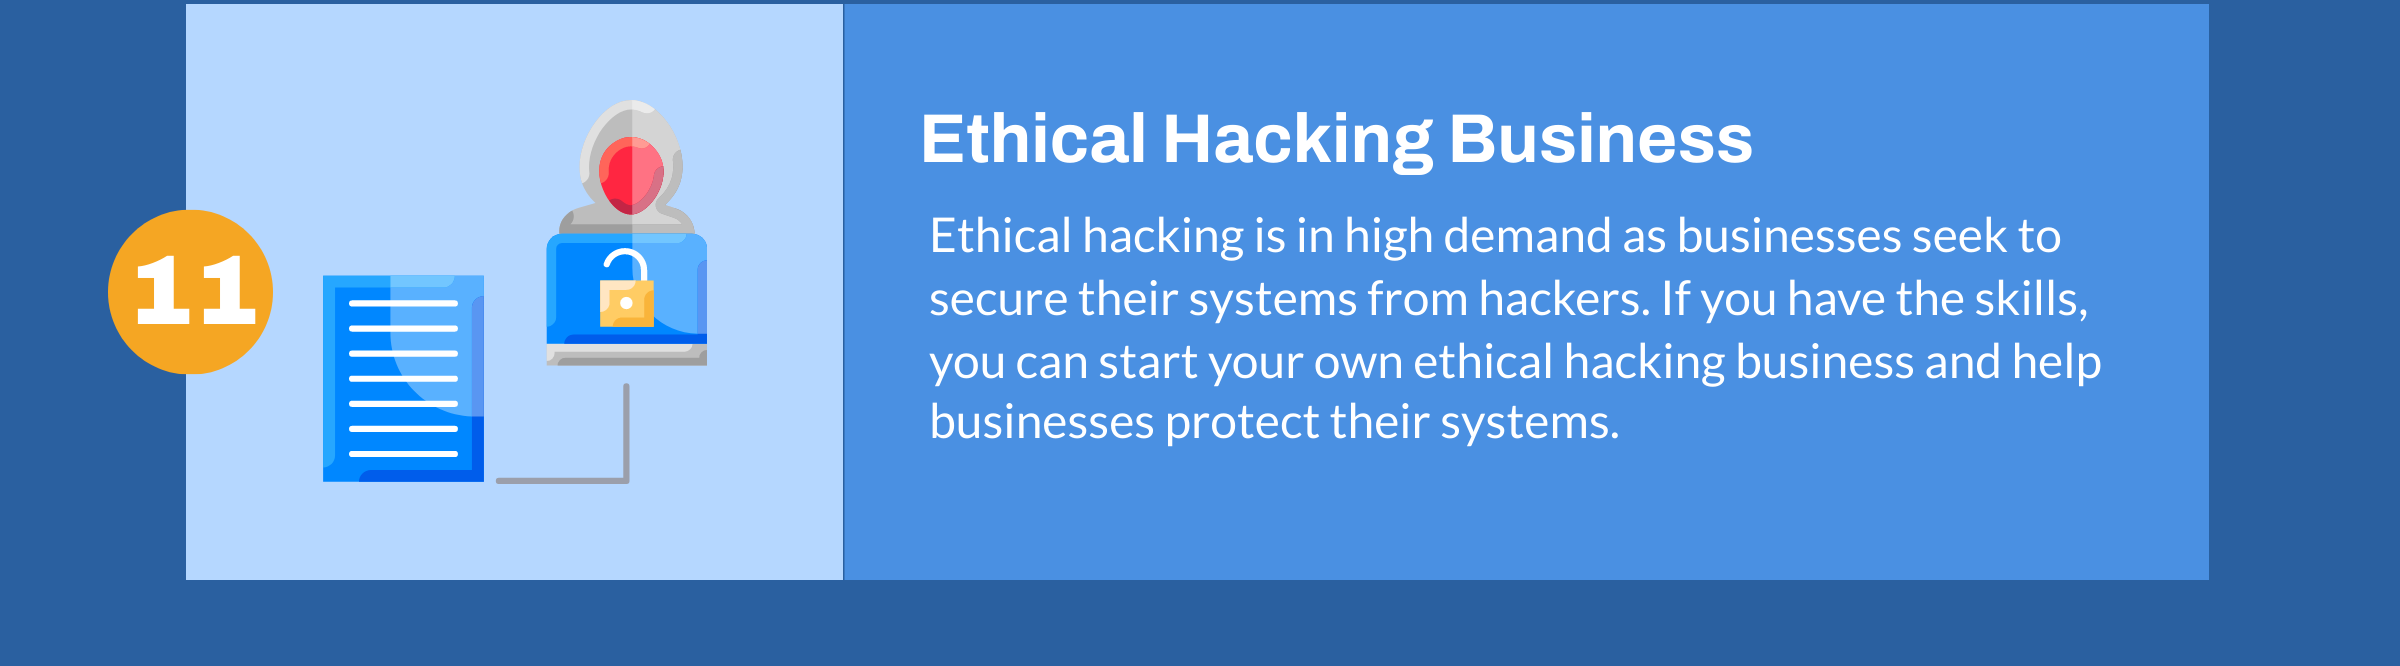 Afaceri de hacking etic